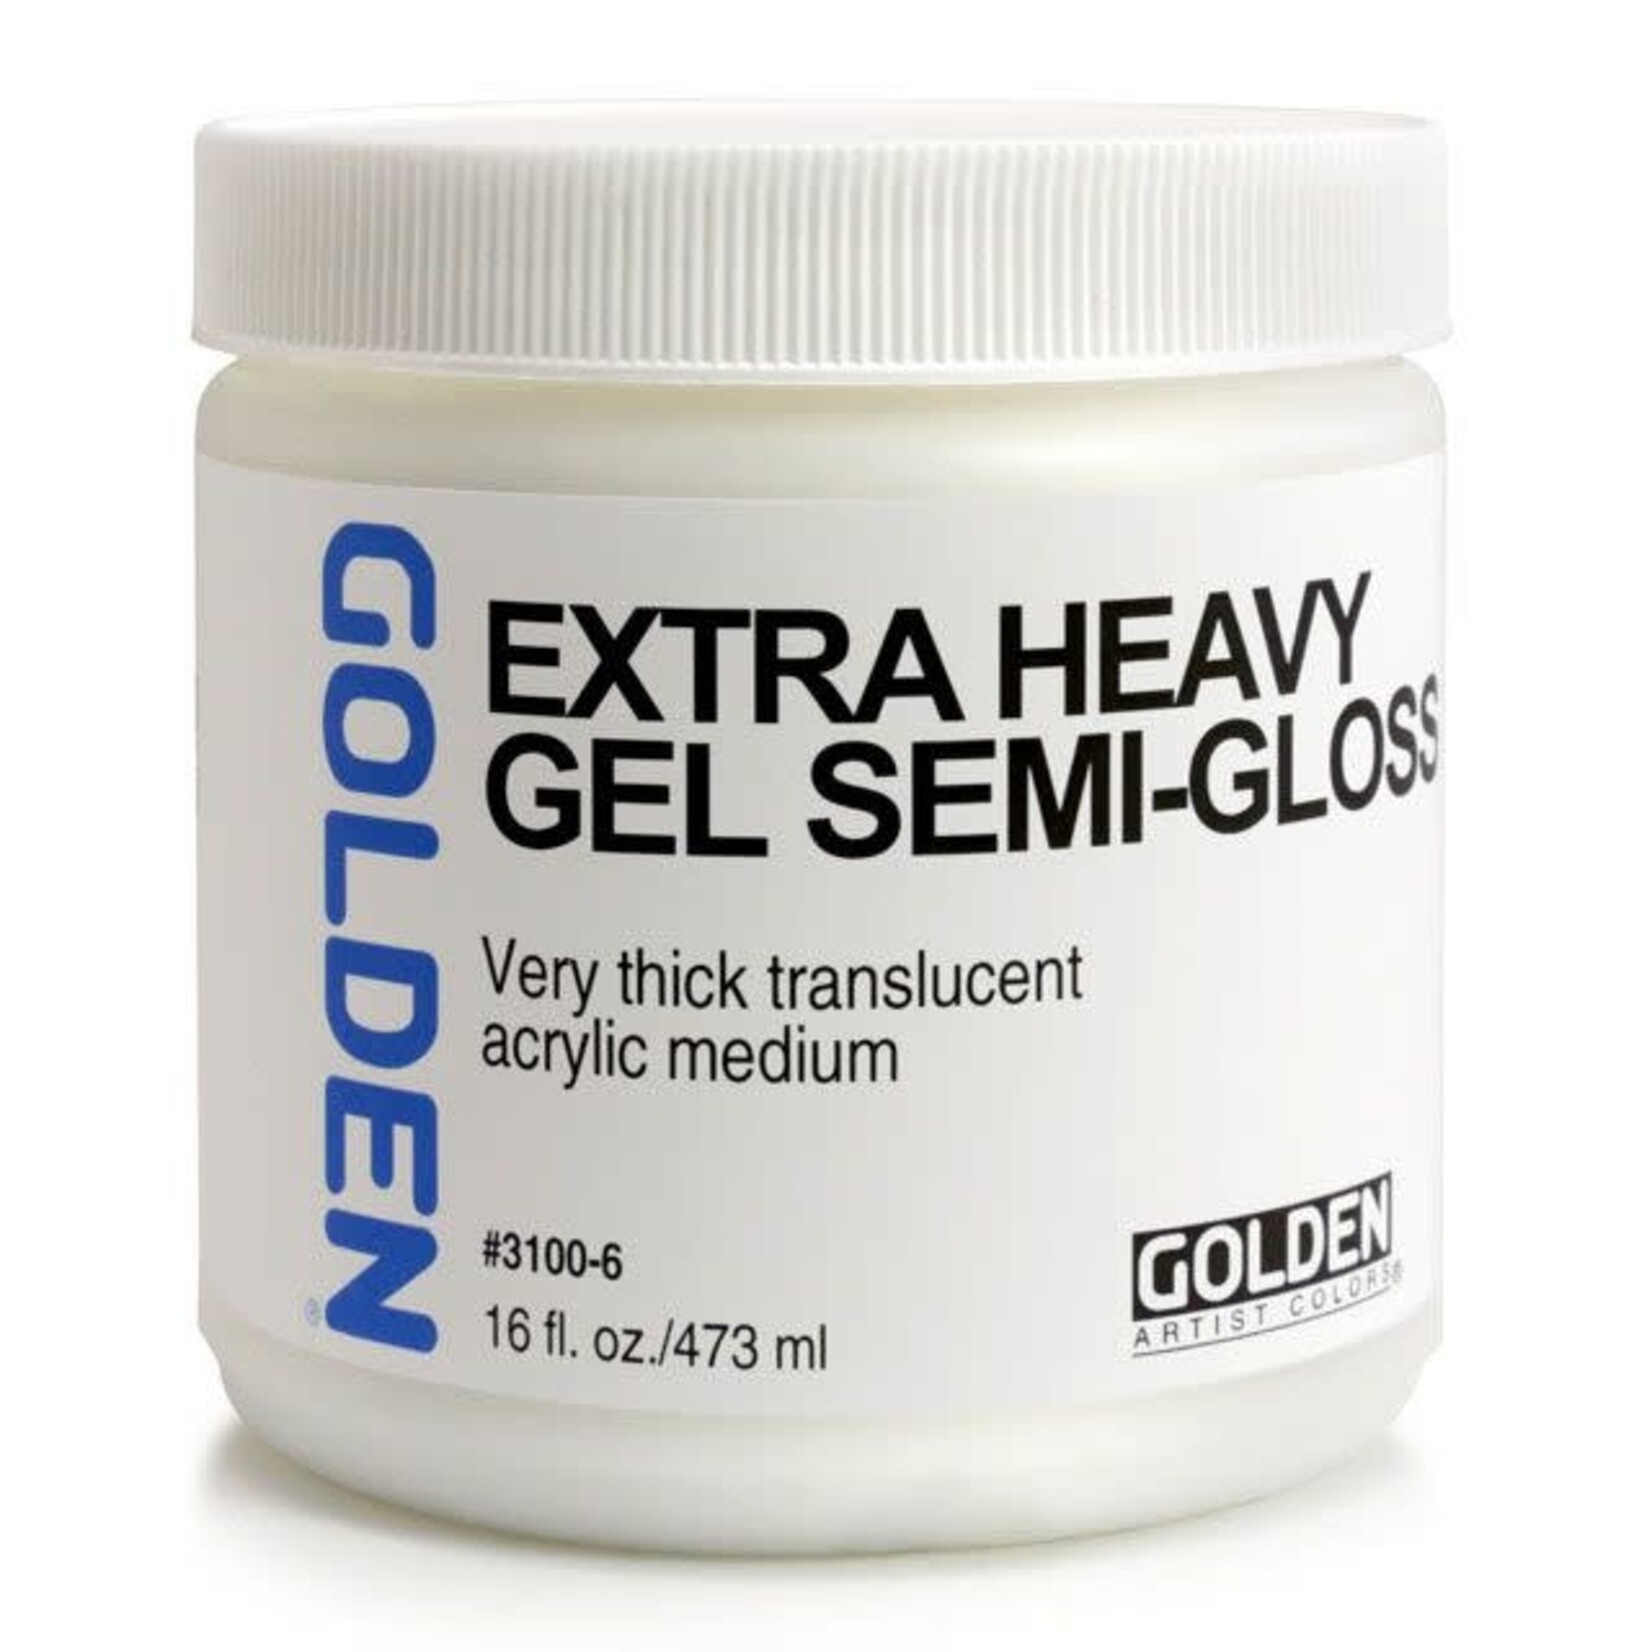 Golden Extra Heavy Gel Semi-Gloss- 16 oz